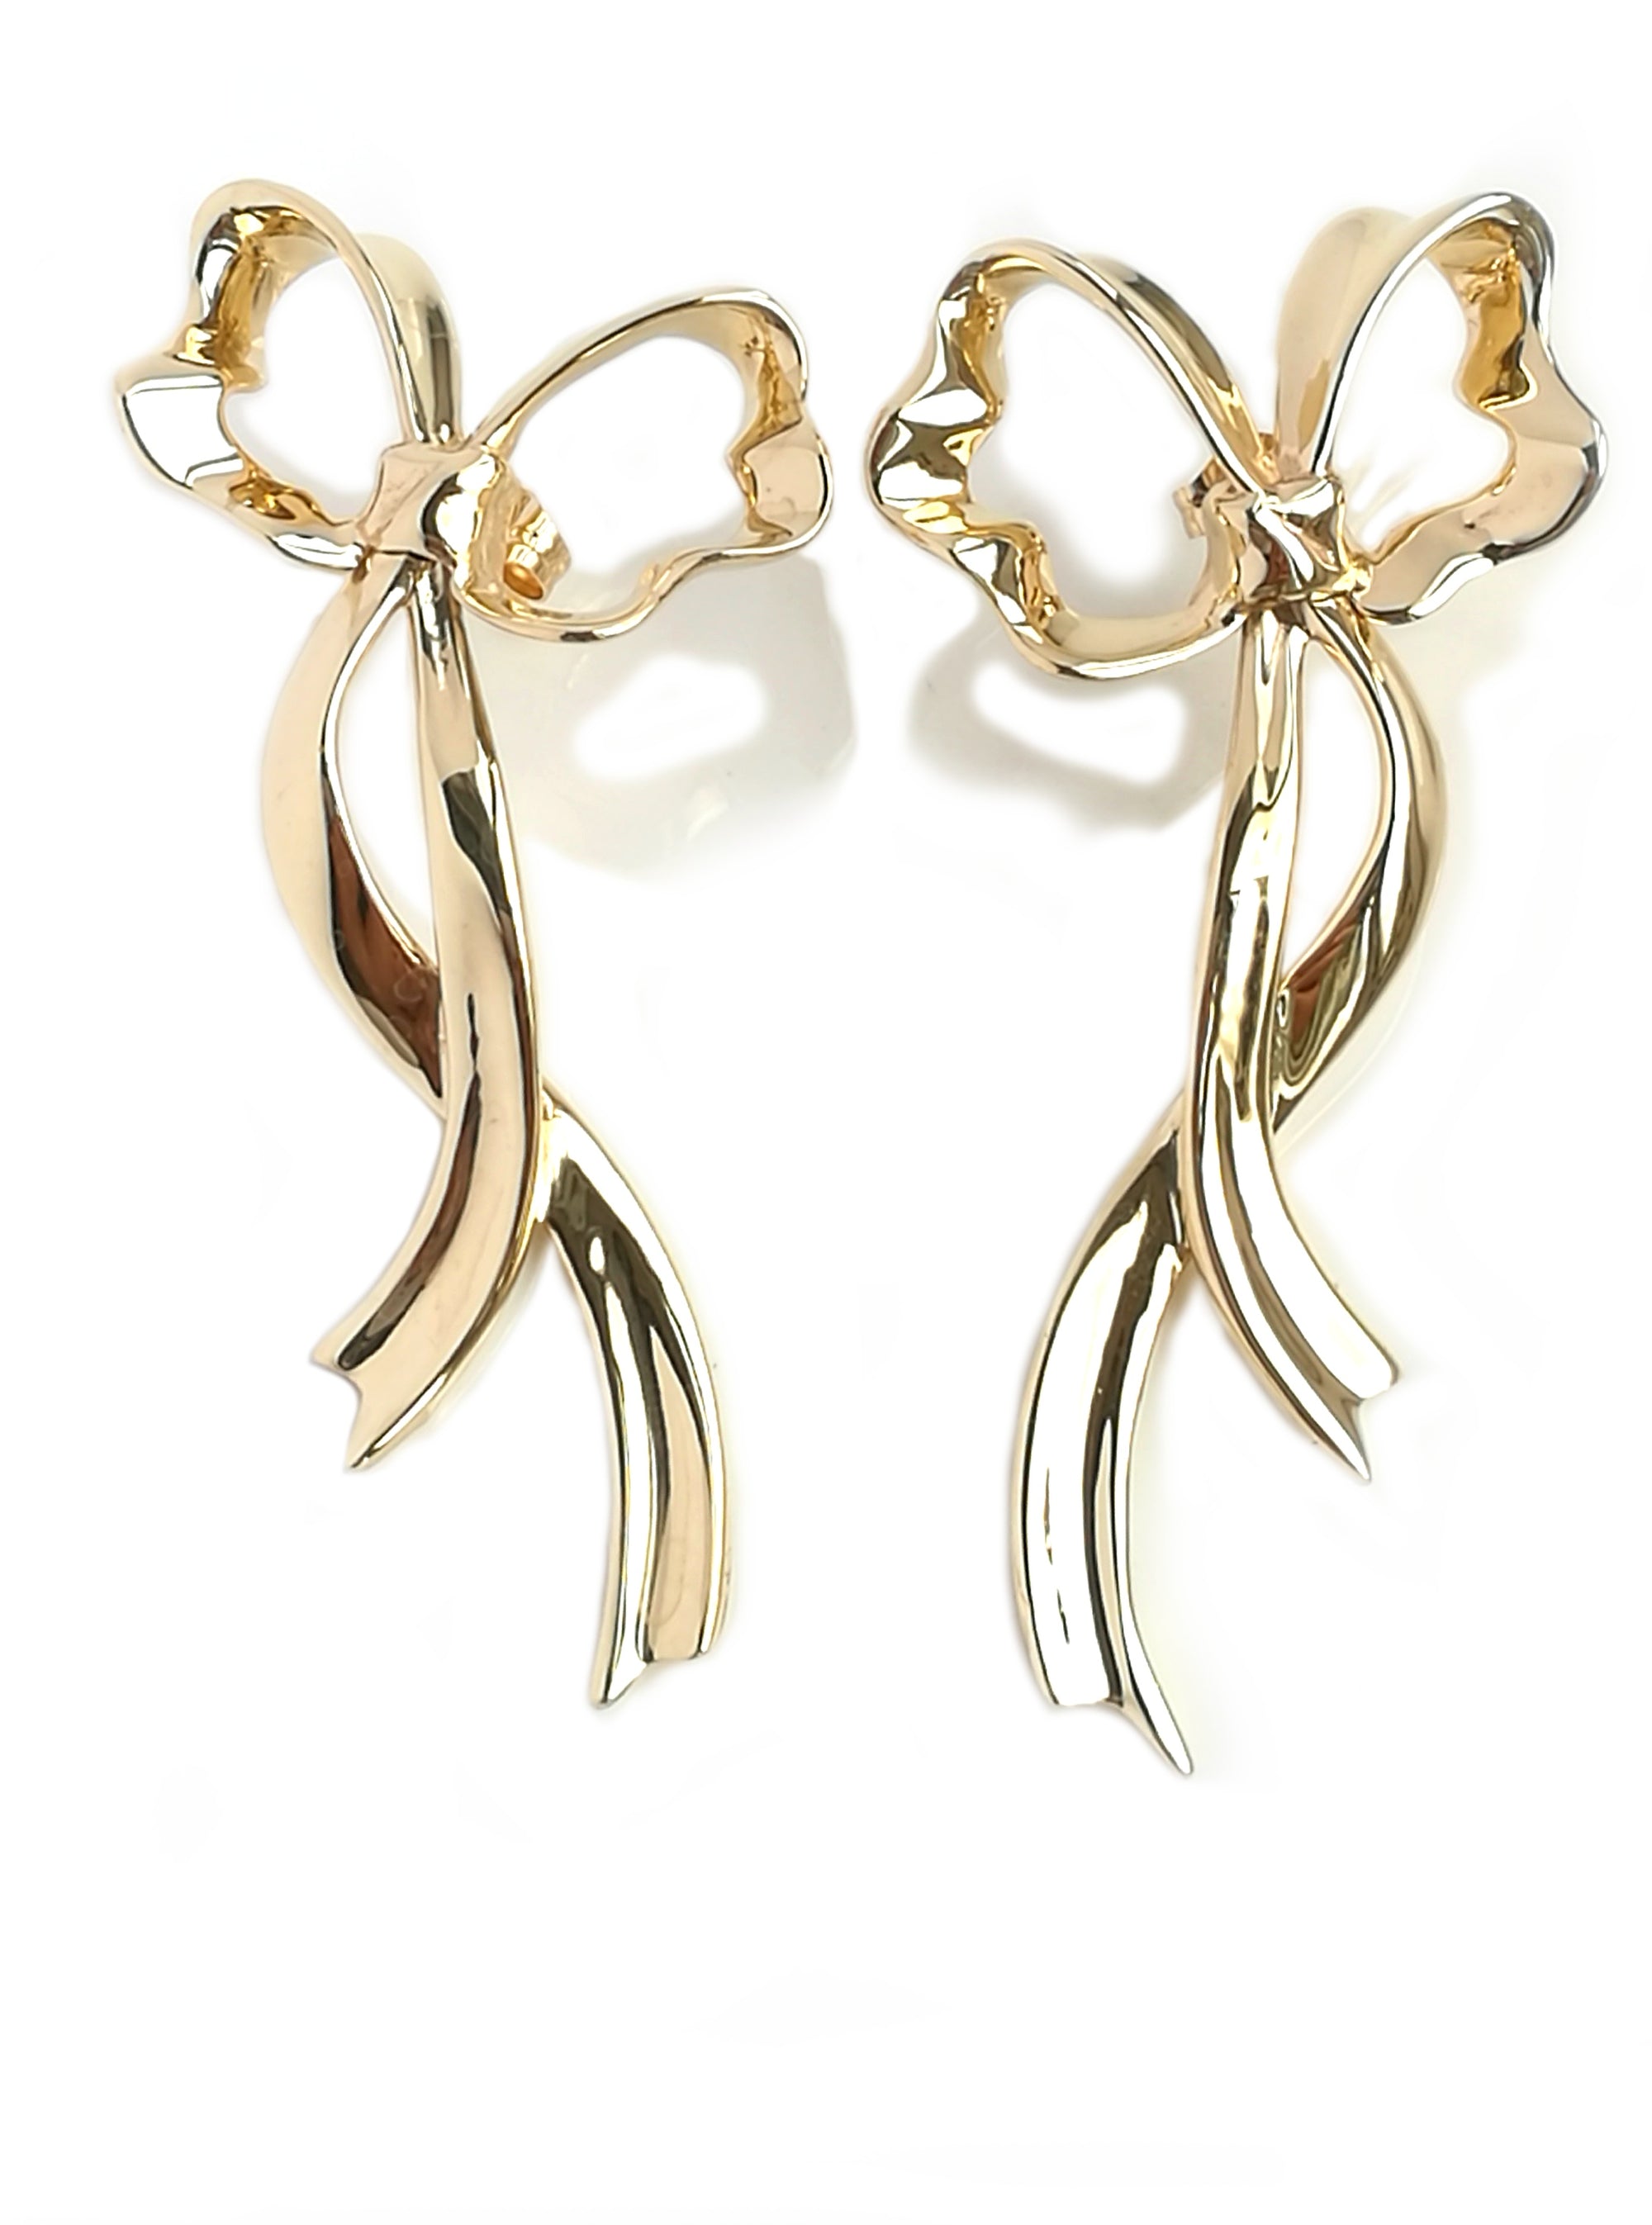 Vintage 1970s Tiffany & Co 14k Yellow Gold Ribbon Earrings